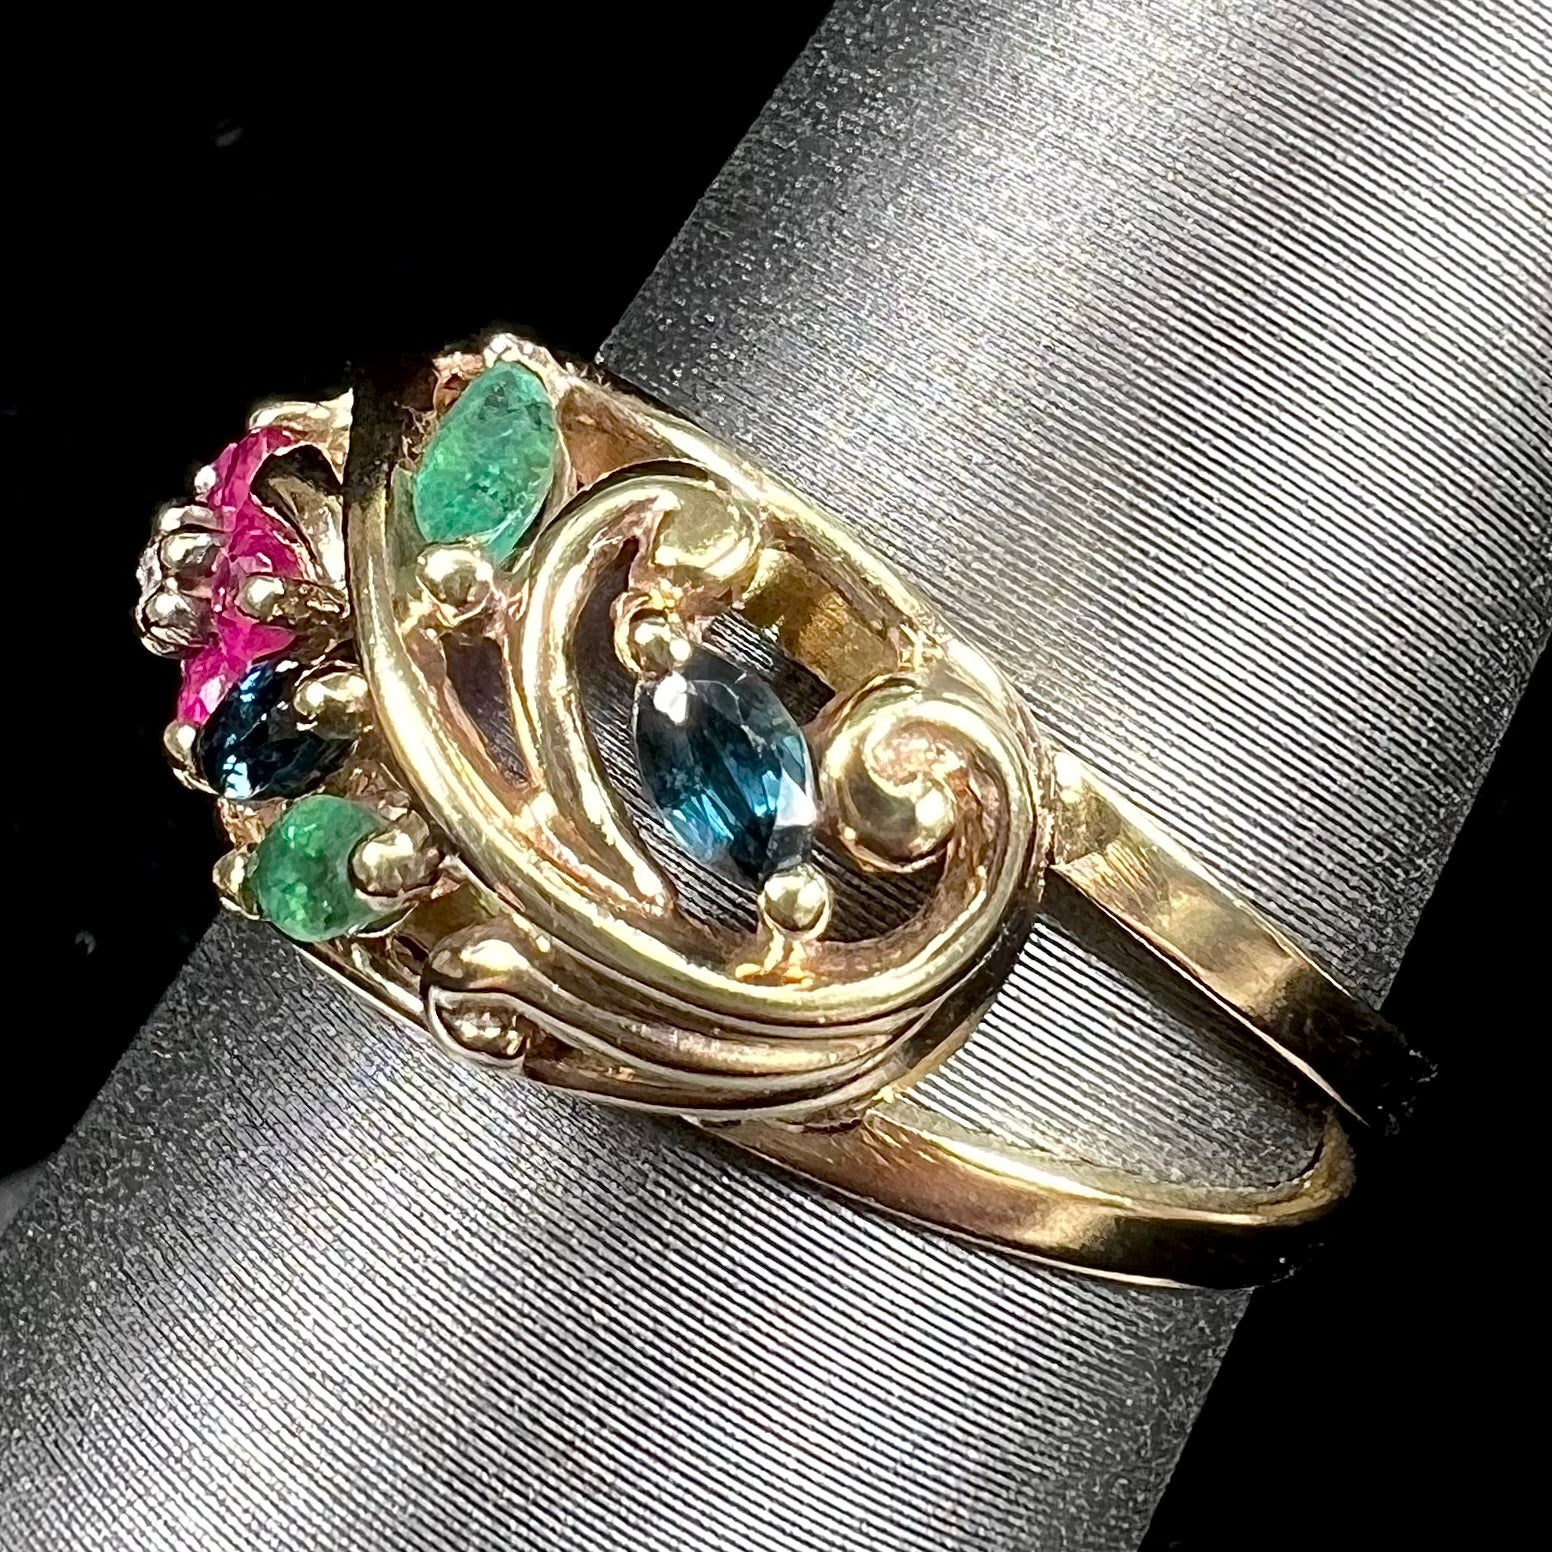 Alluring Semi precious Gemstone Rings for Women and Girls